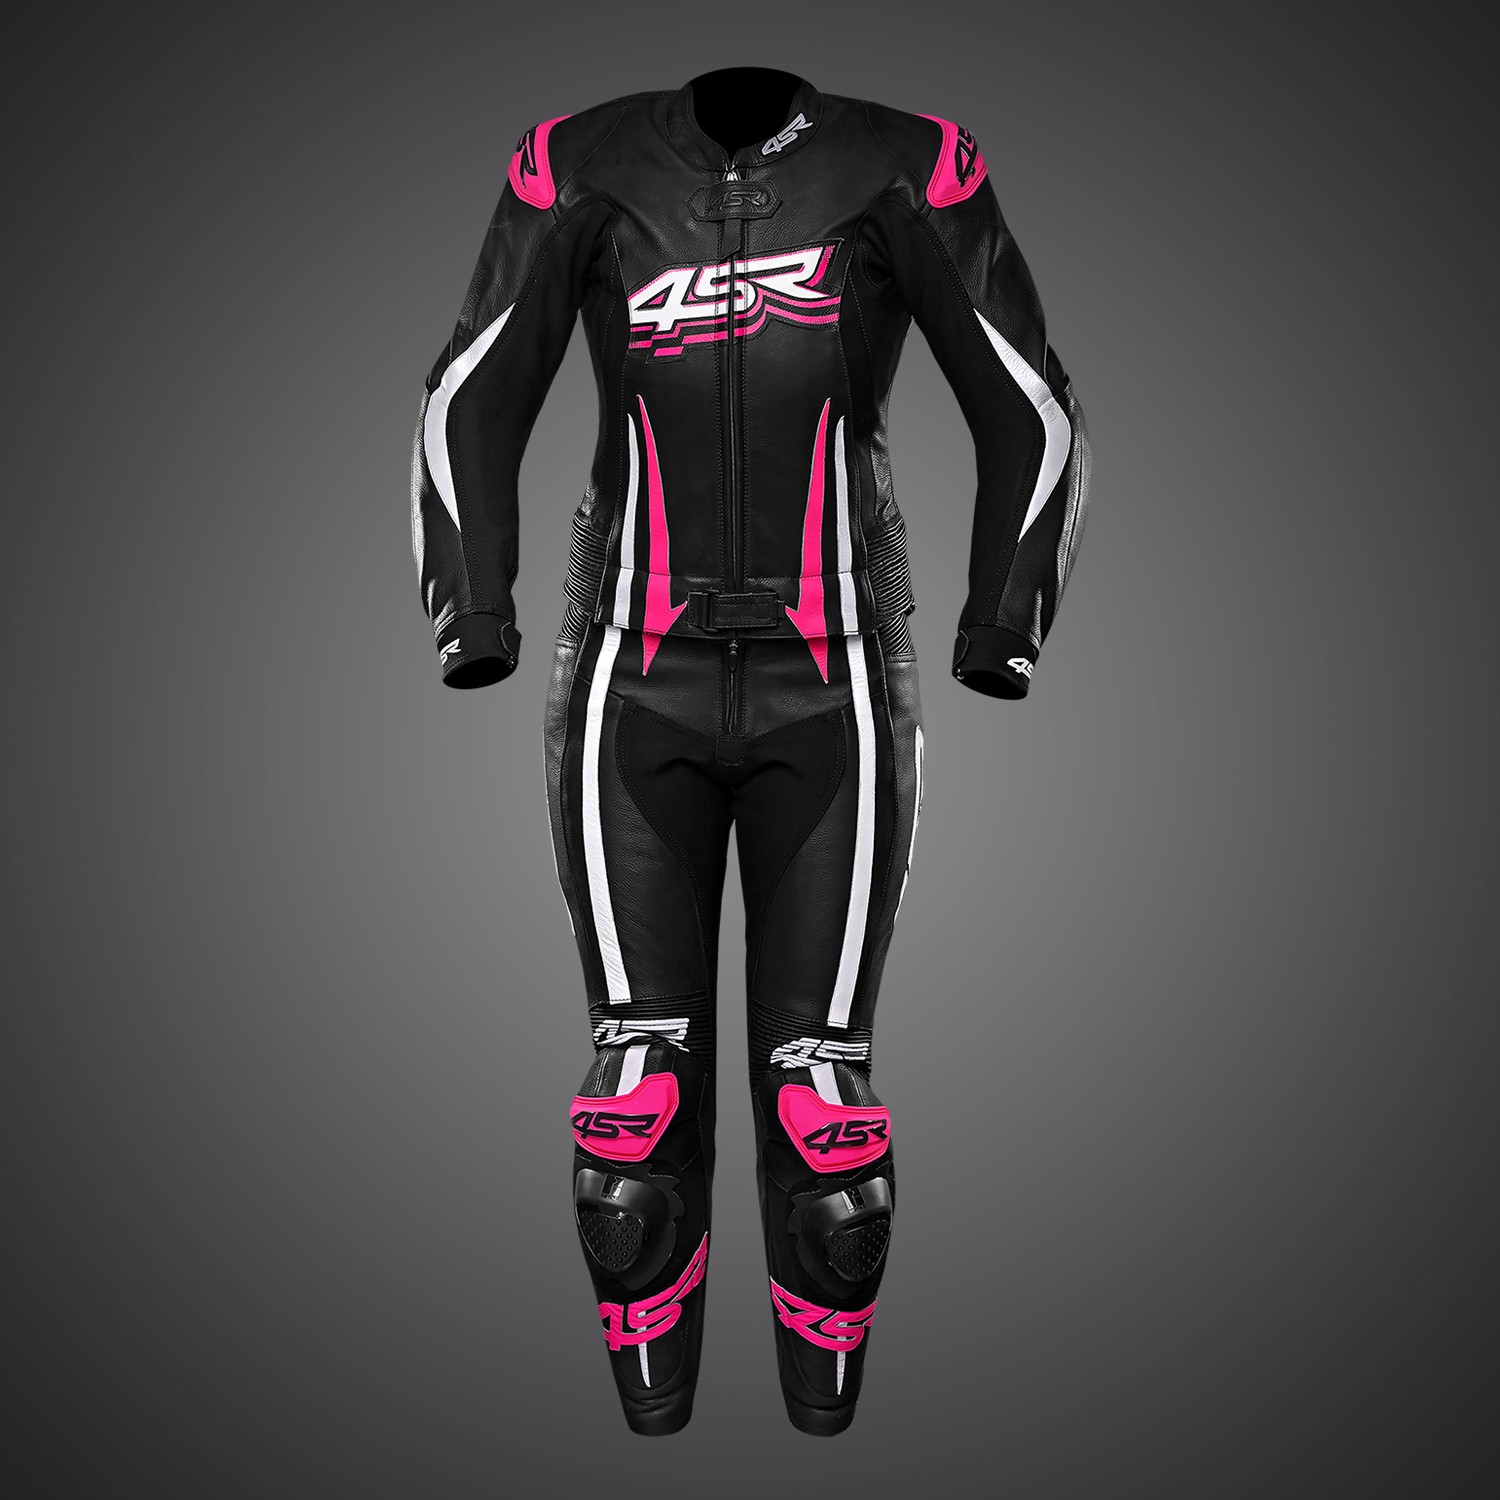 4SR Damen Motorrad Lederkombi Racing Lady Pink 2-Teiler